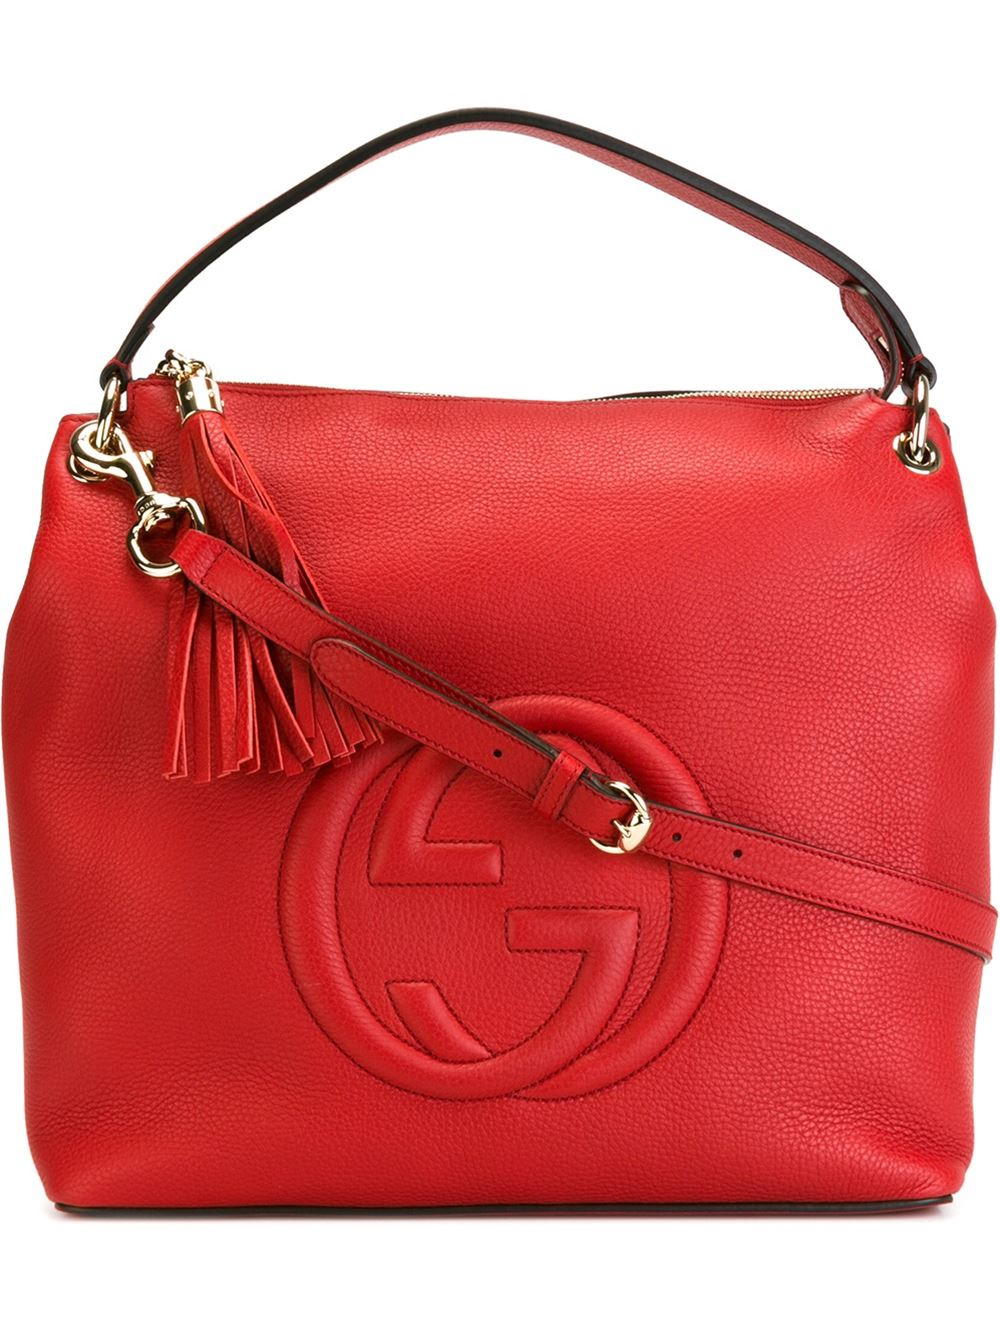 bloomingdale's gucci handbags